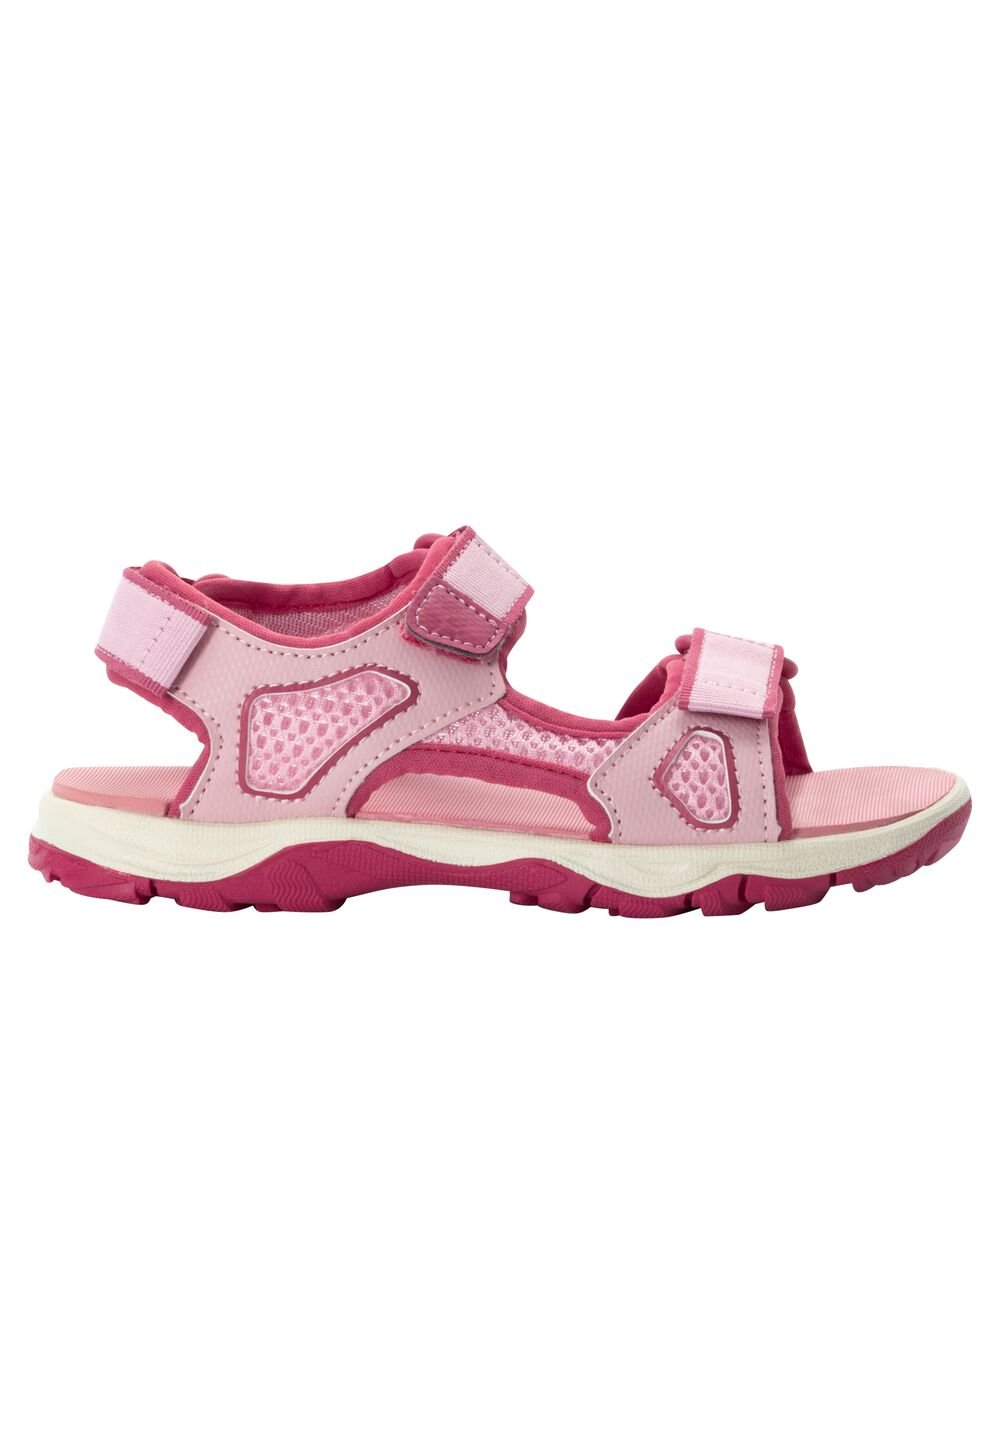 Jack Wolfskin Taraco Beach Sandal Kids Kinderen sandalen 34 soft pink soft pink